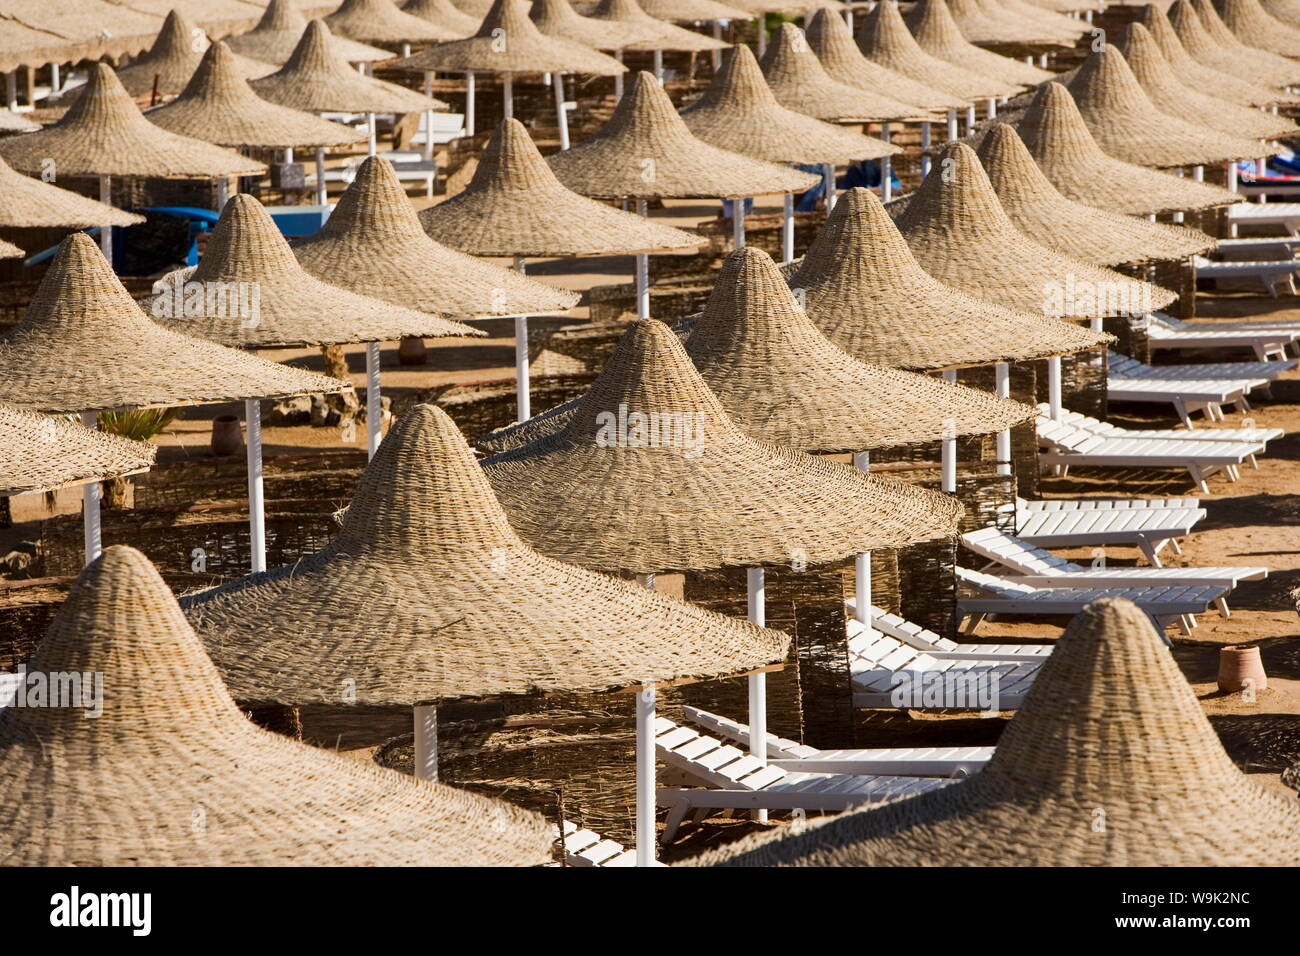 Beach umbrellas, Egypt, North Africa, Africa Stock Photo